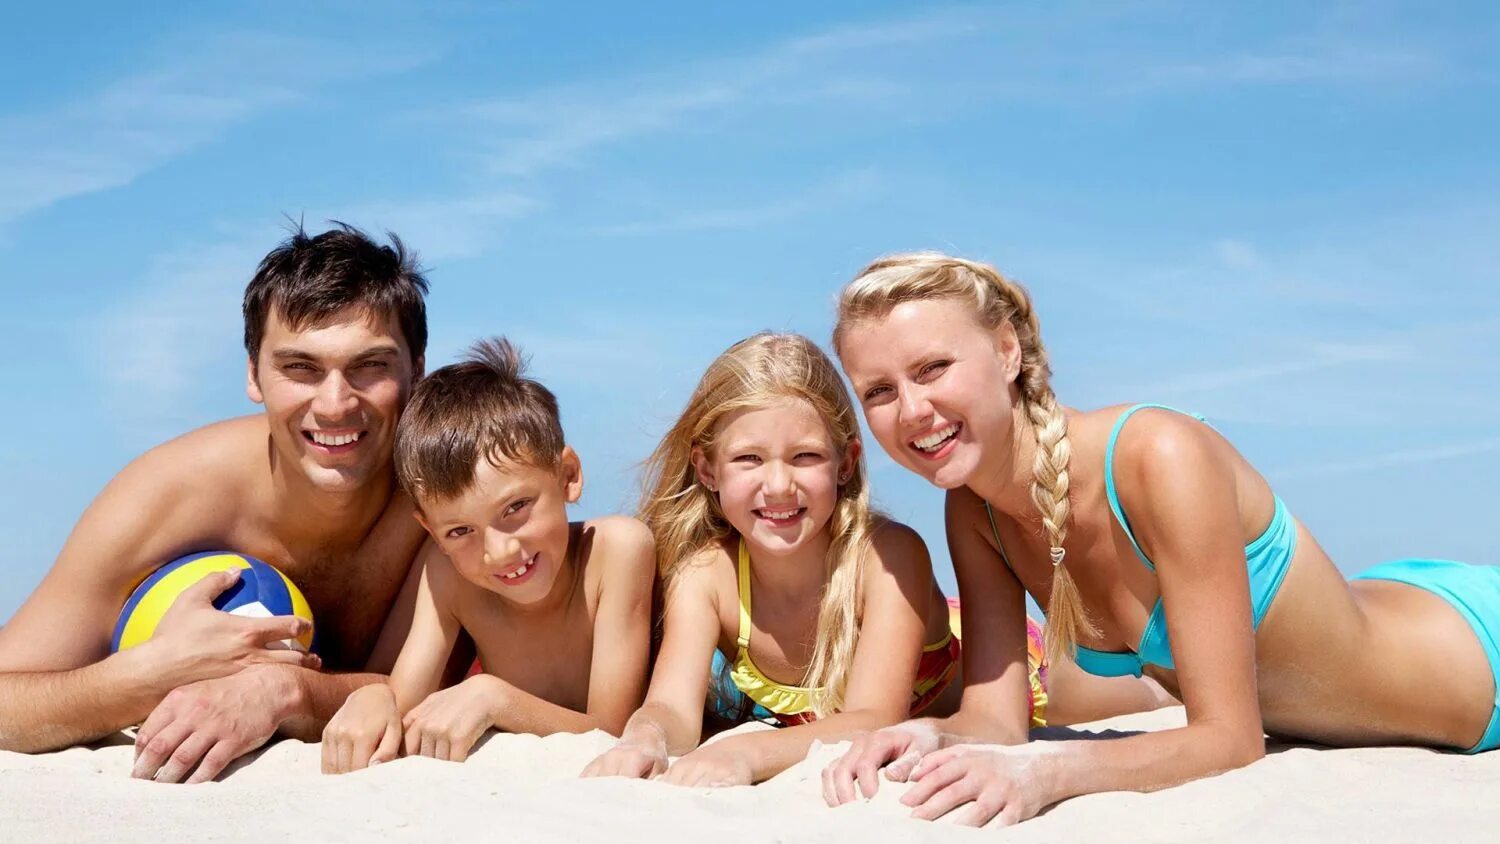 Семья на пляже. Семья на отдыхе. Семья на море фото. Дети на море загорают. Naturistin com